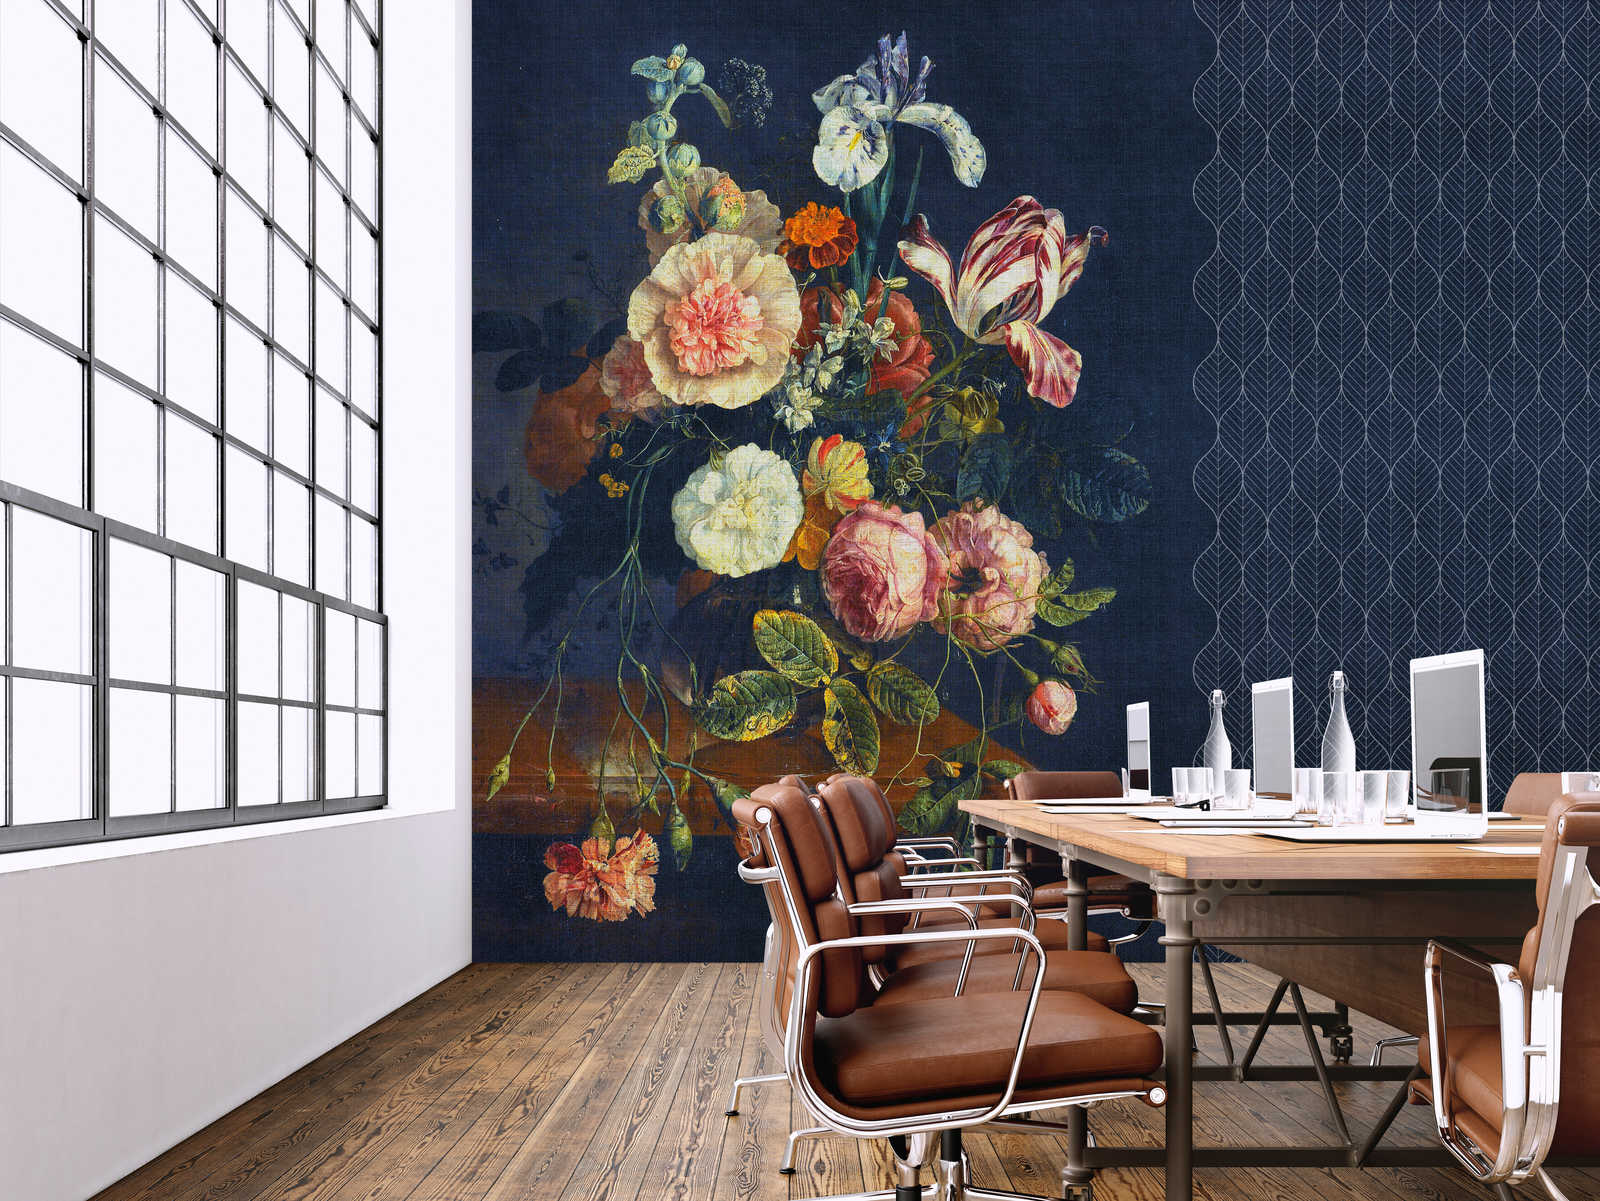             Cortina 2 - Dark blue photo wallpaper art deco pattern with bouquet of flowers
        